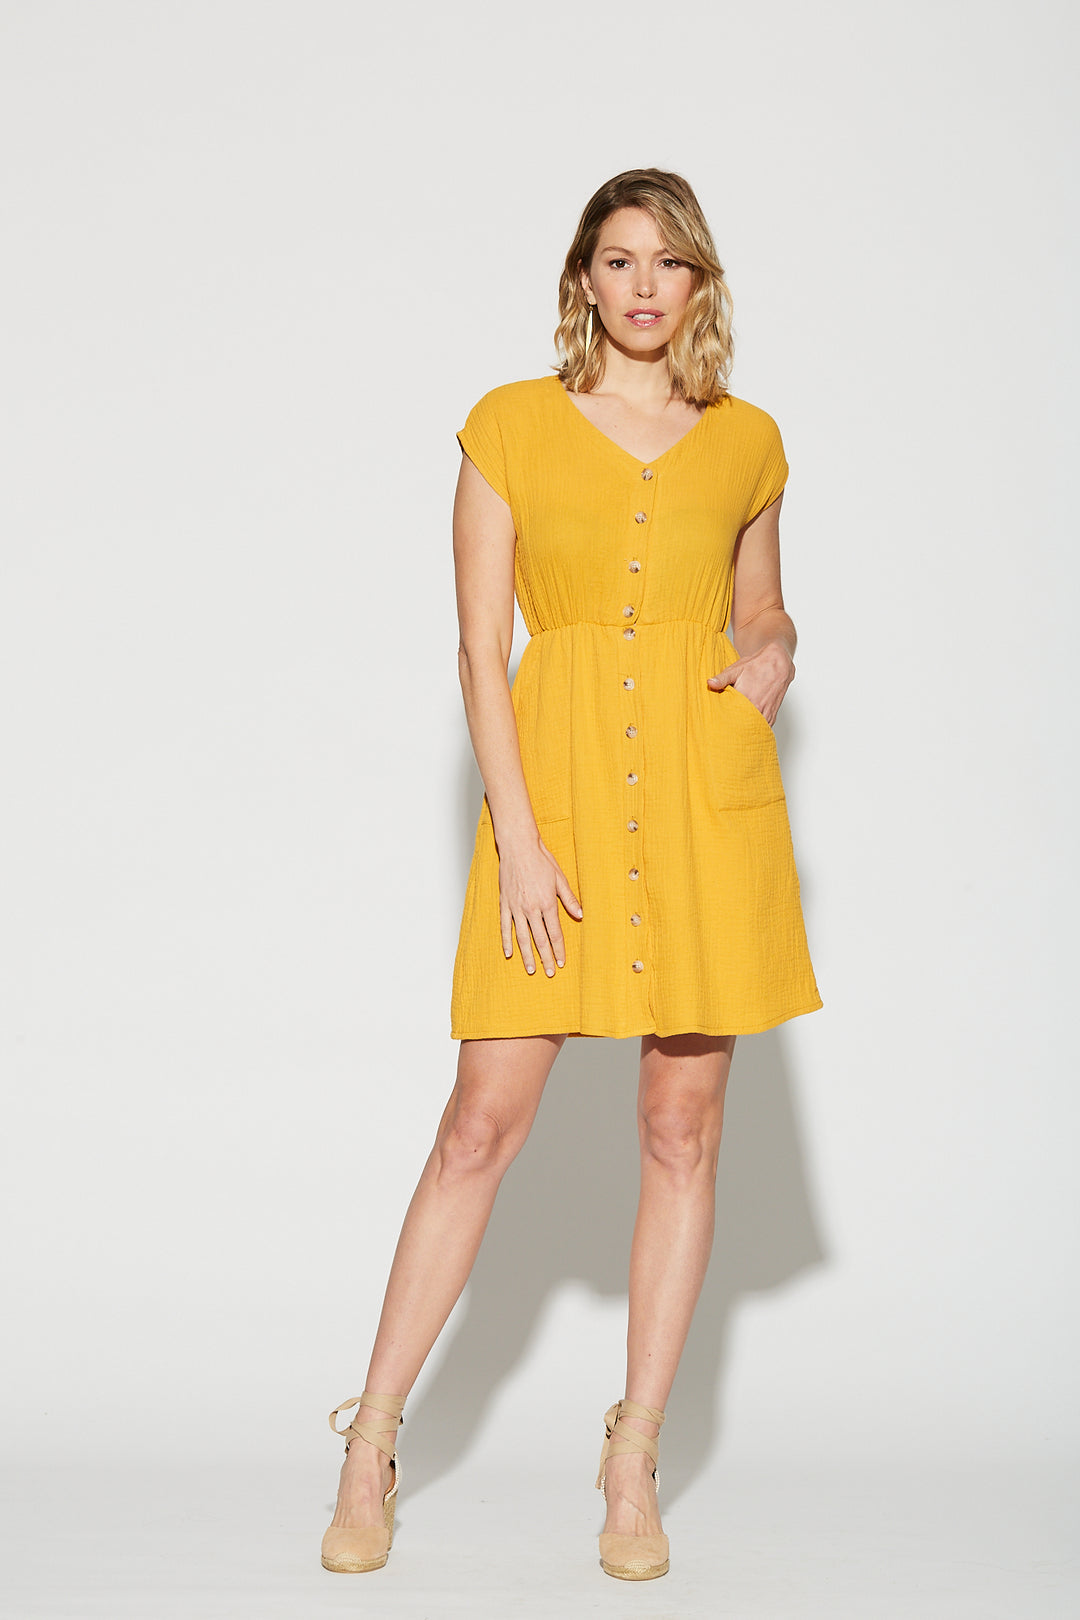 Pixie Dress (Yellow Gauze) - Almost Perfect